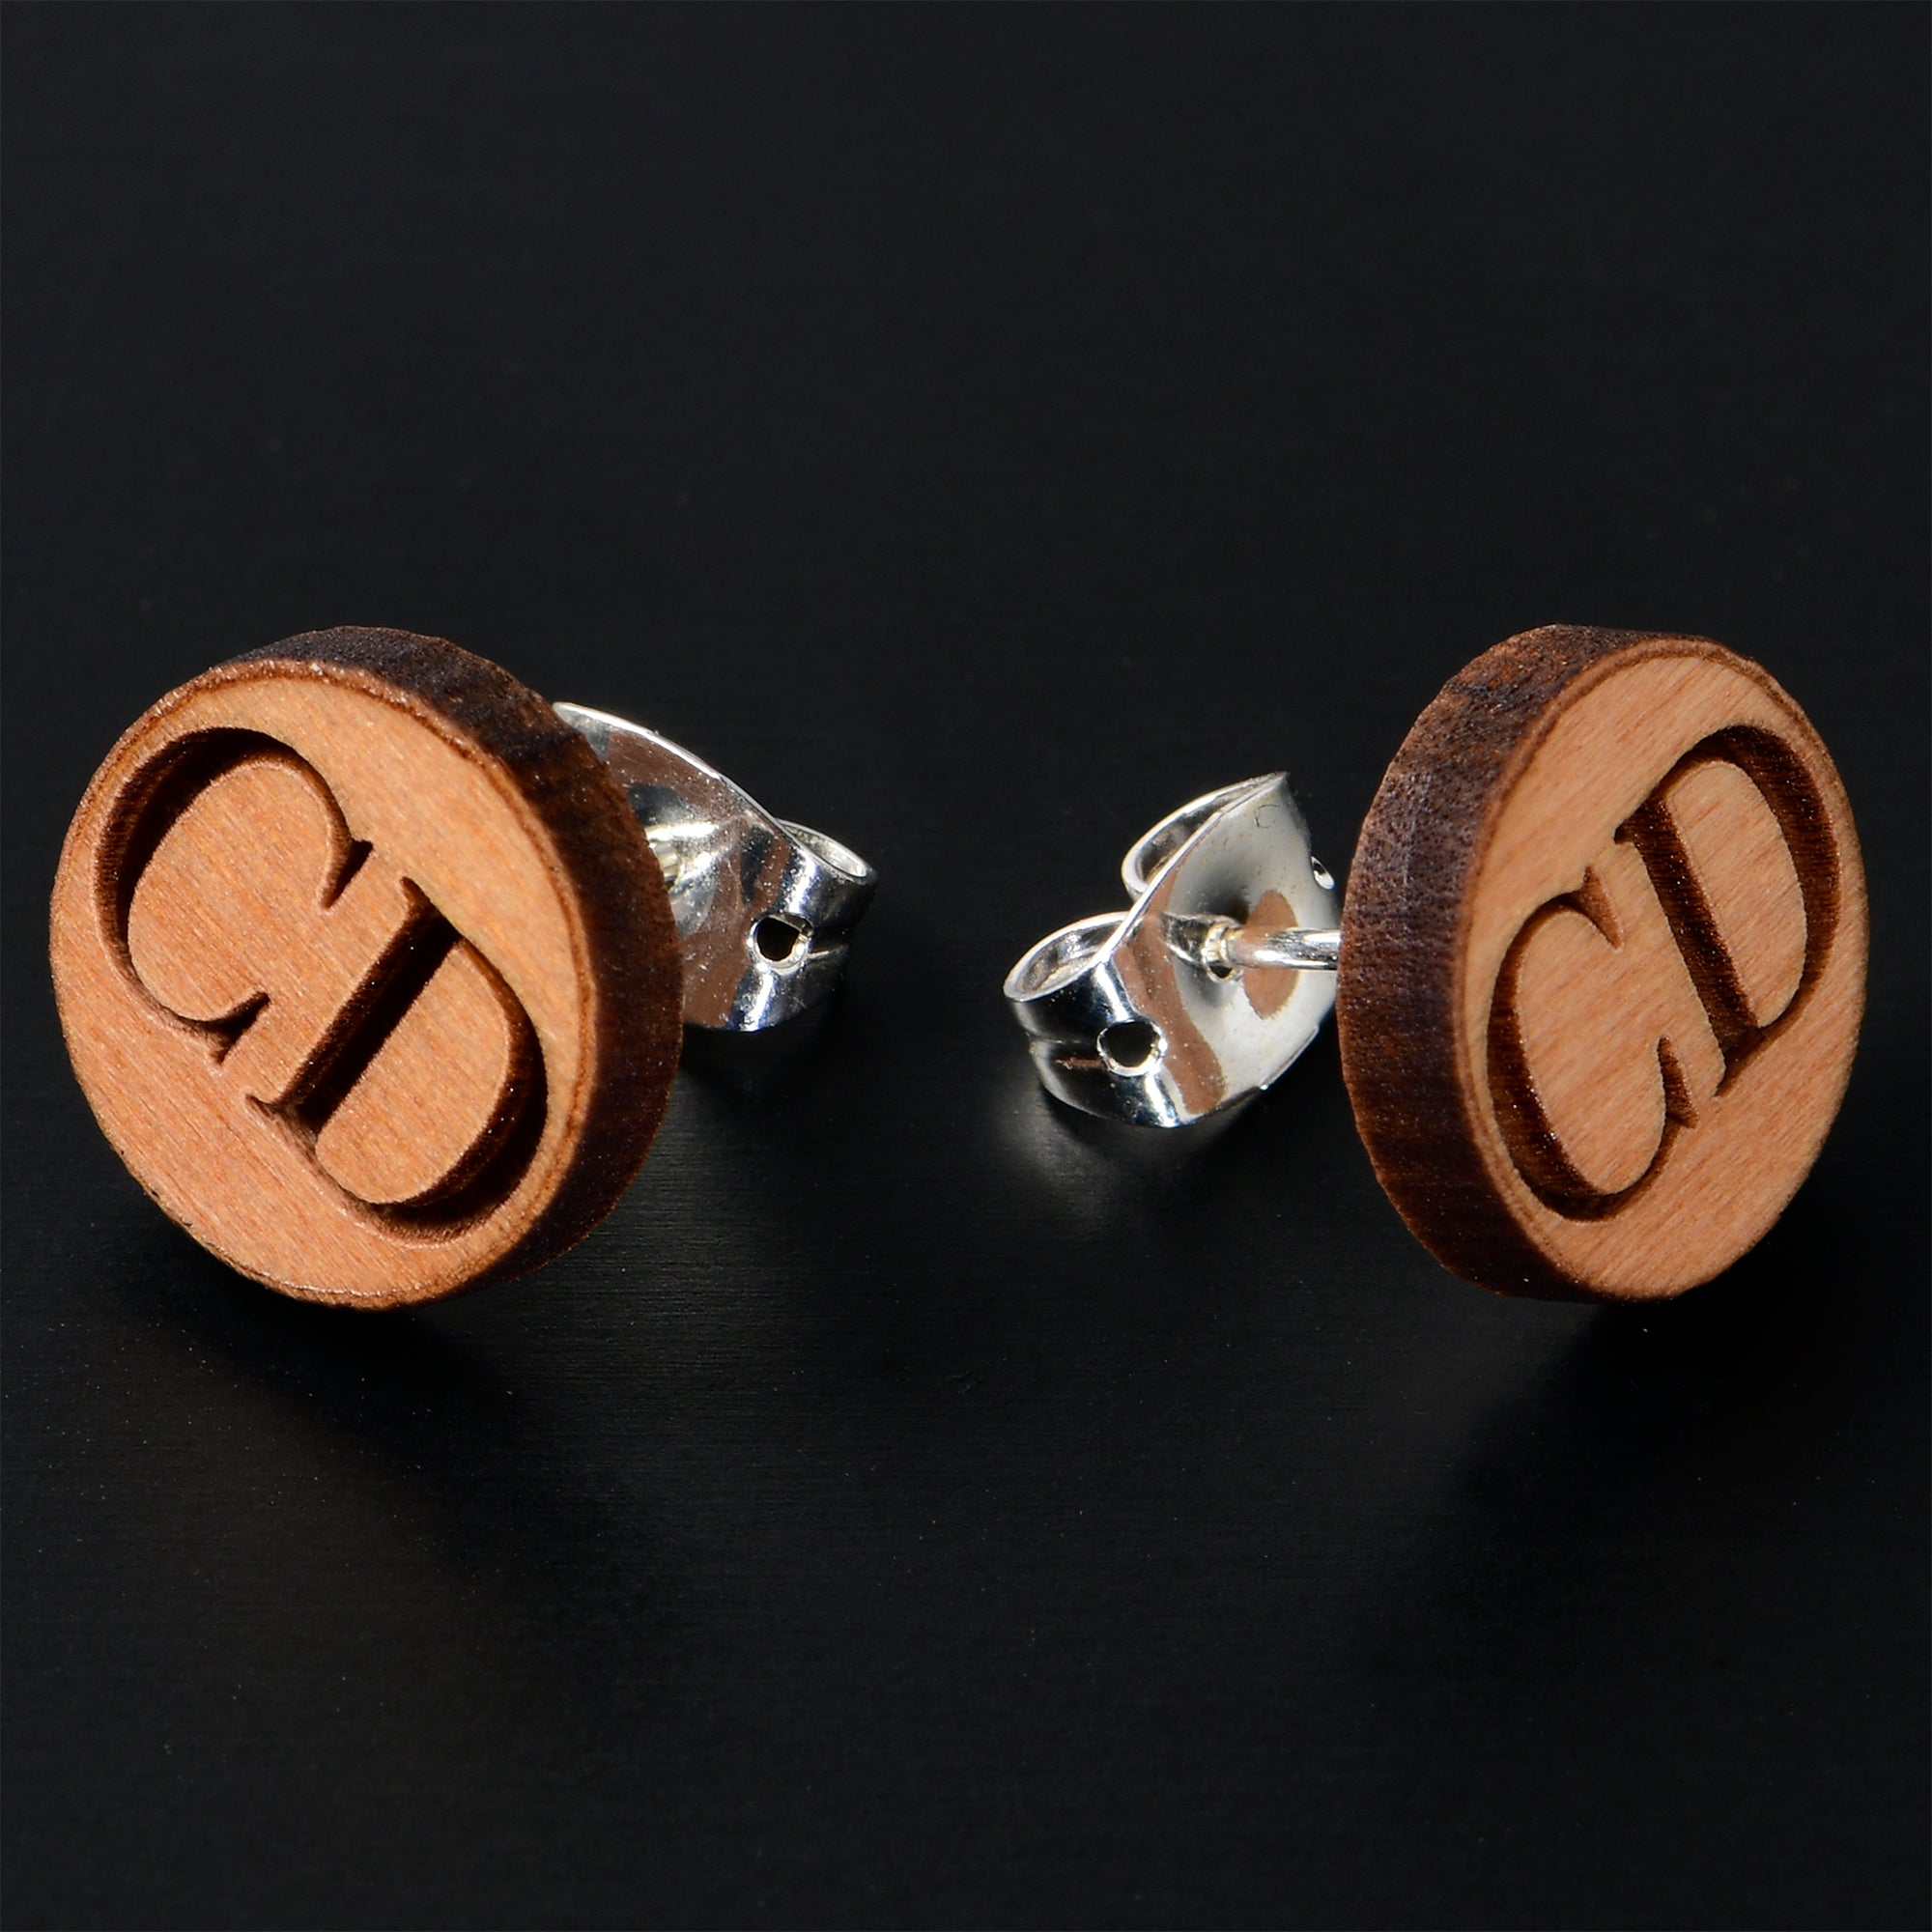 Custom No 1 Earrings Wood Initial Personalized Stud Earrings